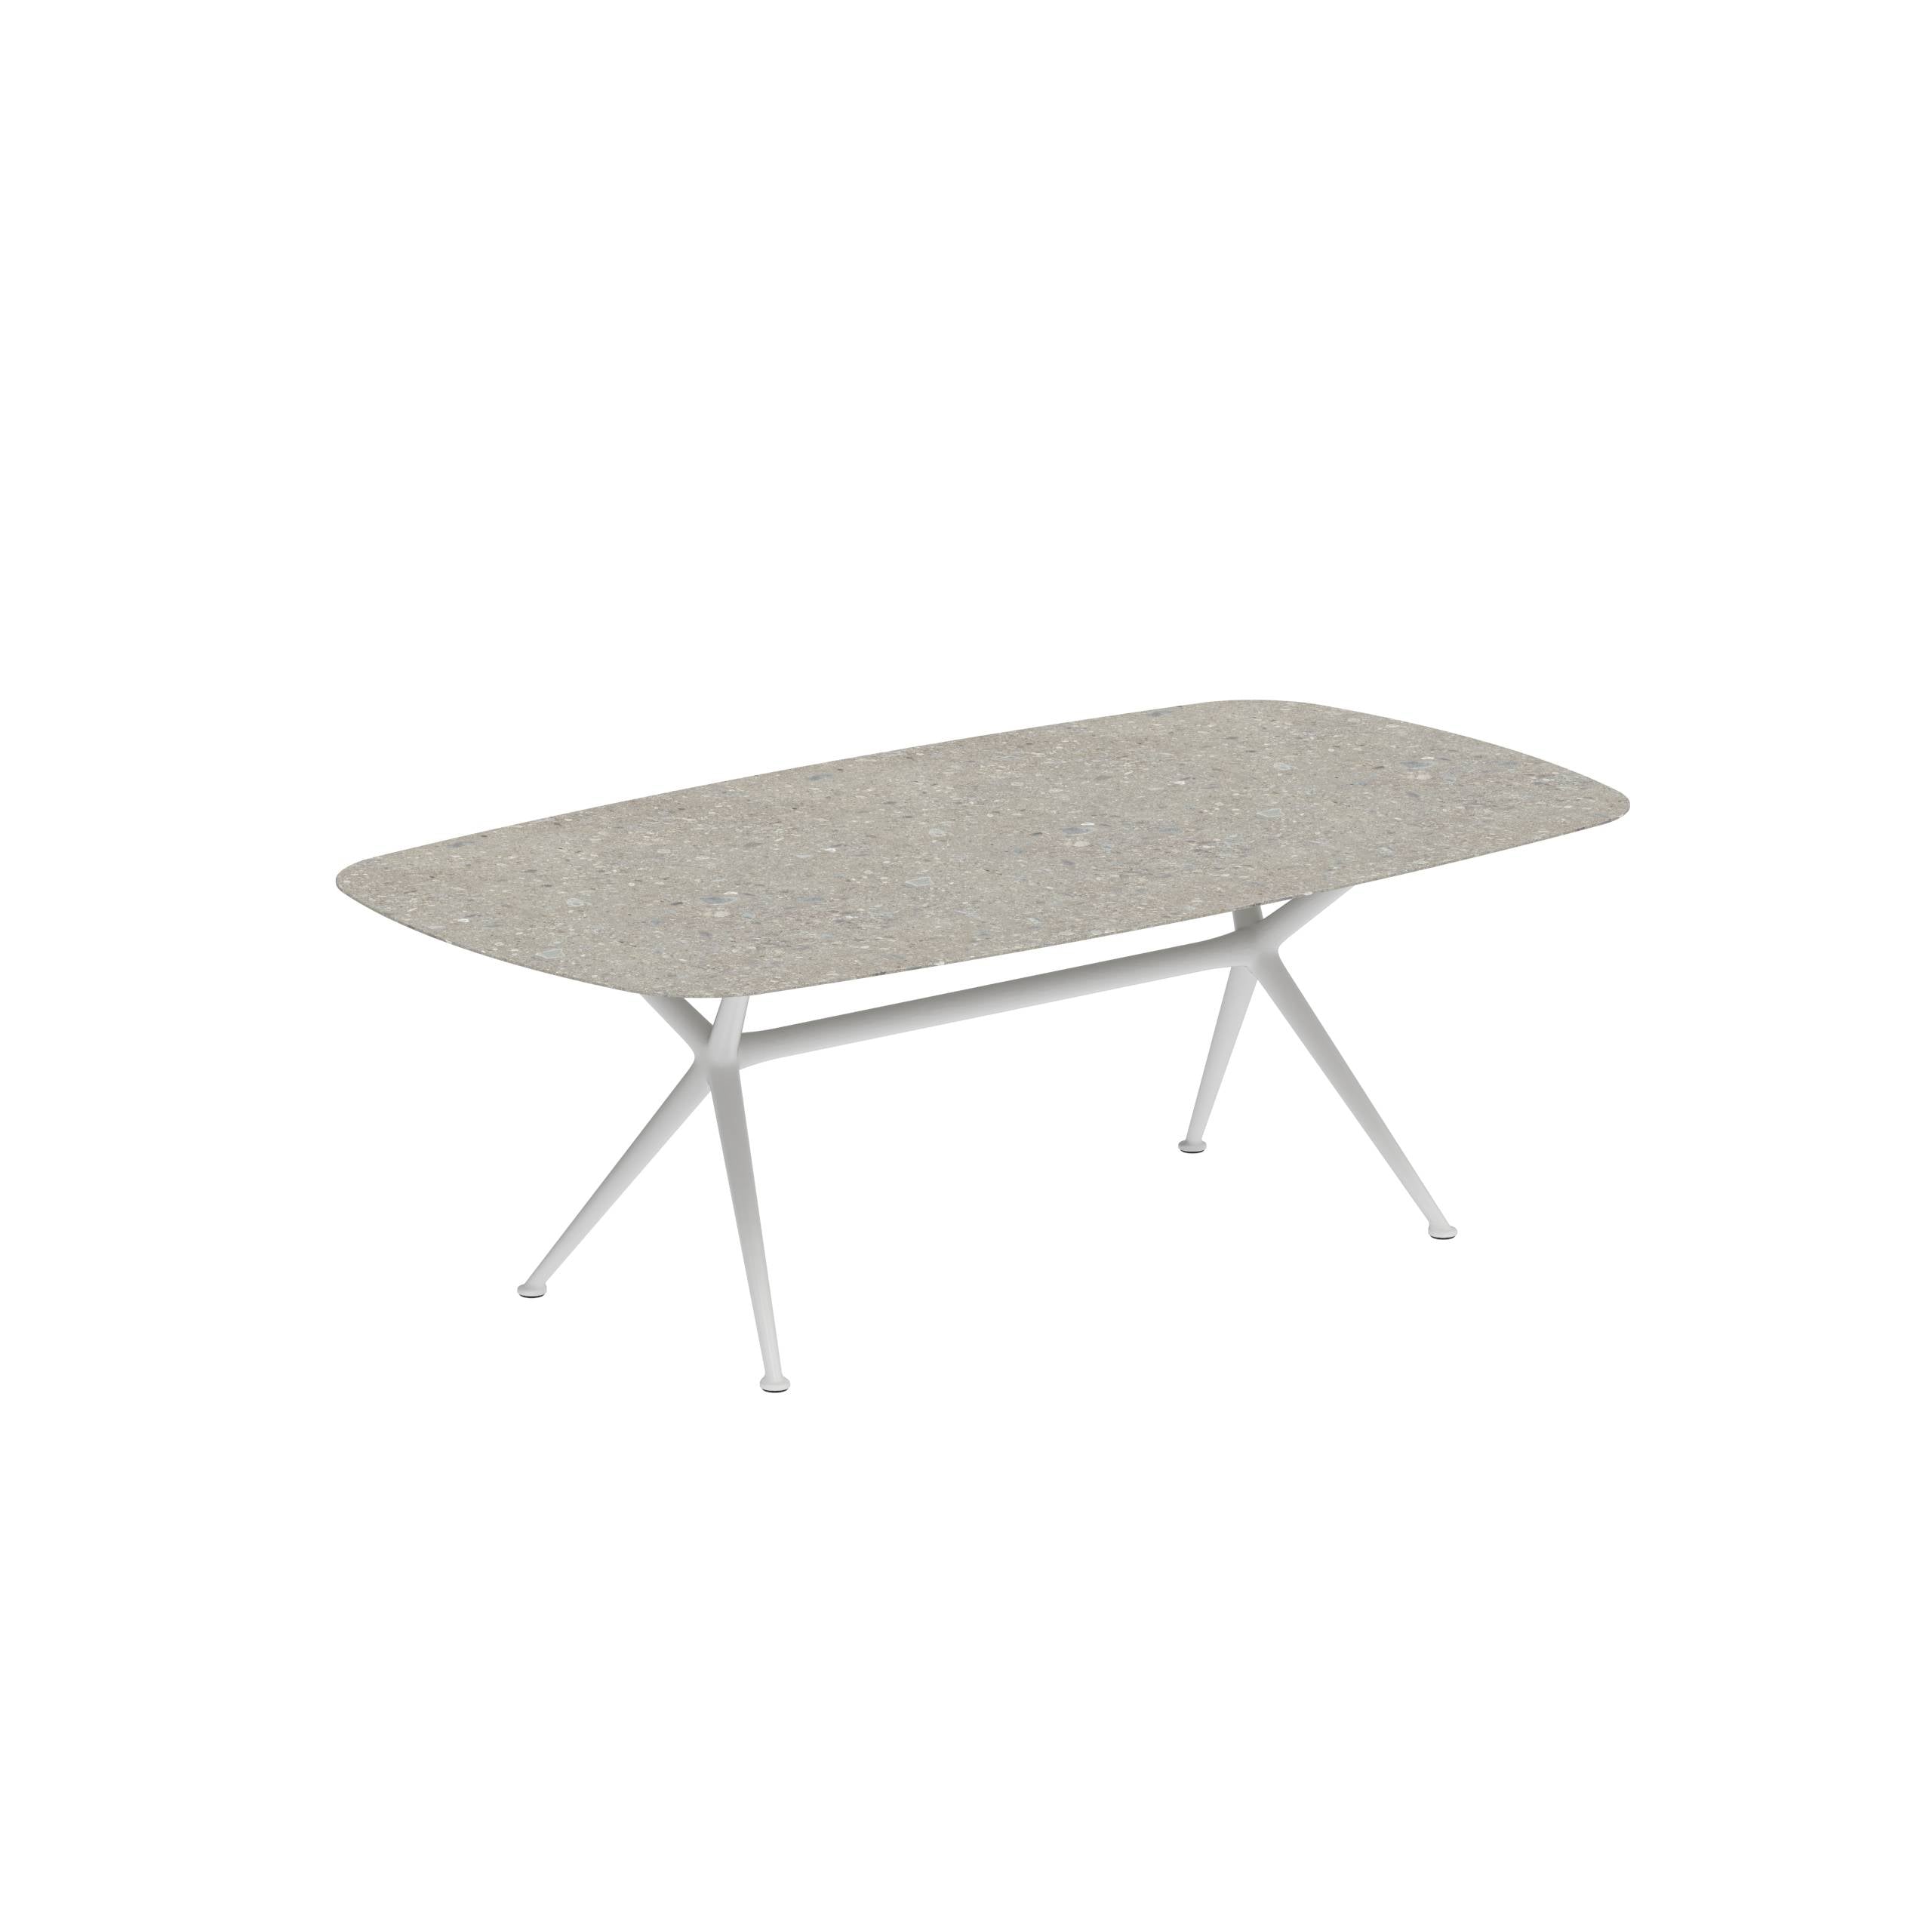 Exes Table 220x120cm Alu Legs White - Table Top Ceramic Ceppo Dolomitica